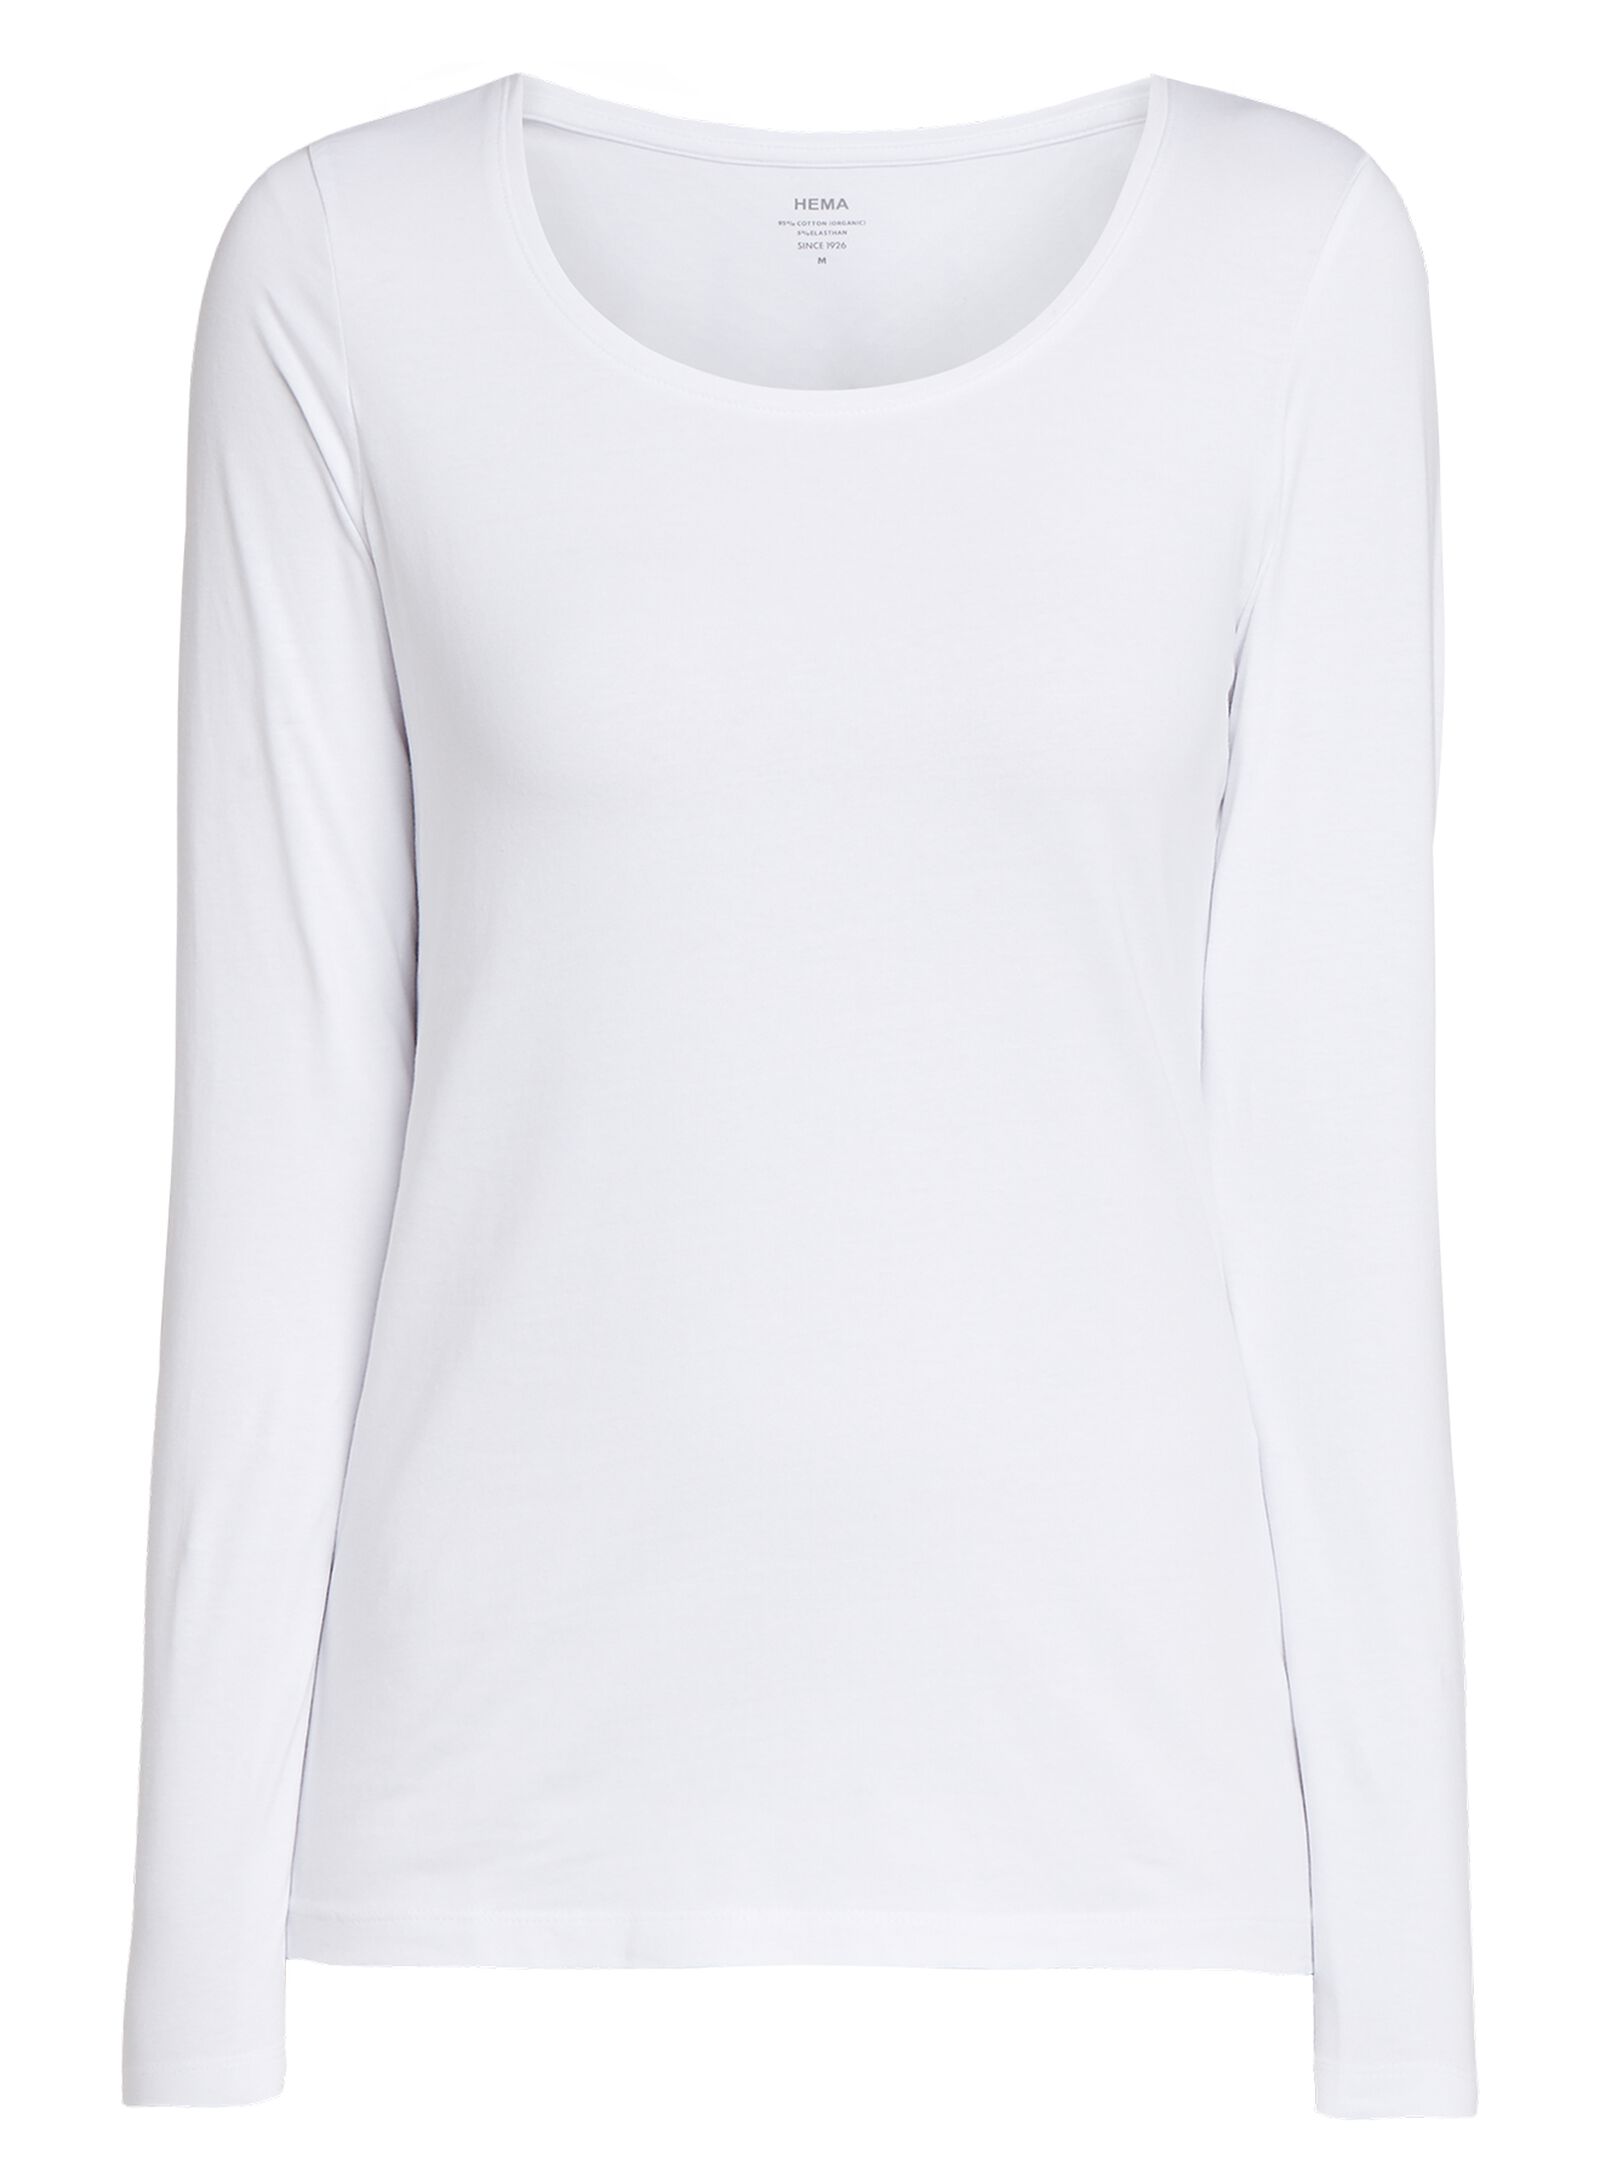 Image of HEMA Dames Basic T-shirt Wit (wit)